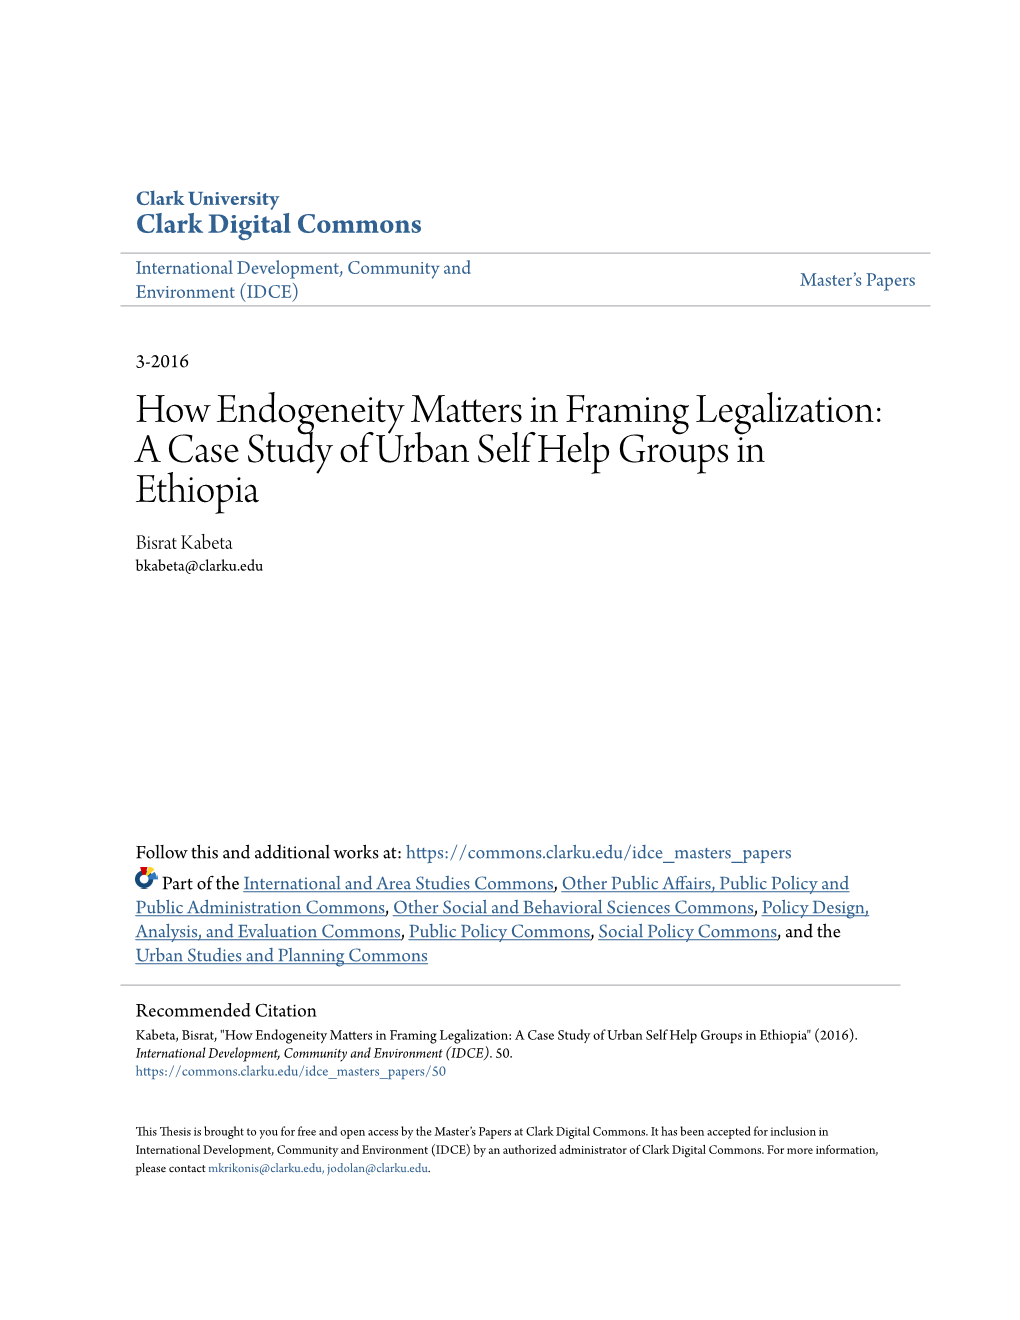 A Case Study of Urban Self Help Groups in Ethiopia Bisrat Kabeta Bkabeta@Clarku.Edu